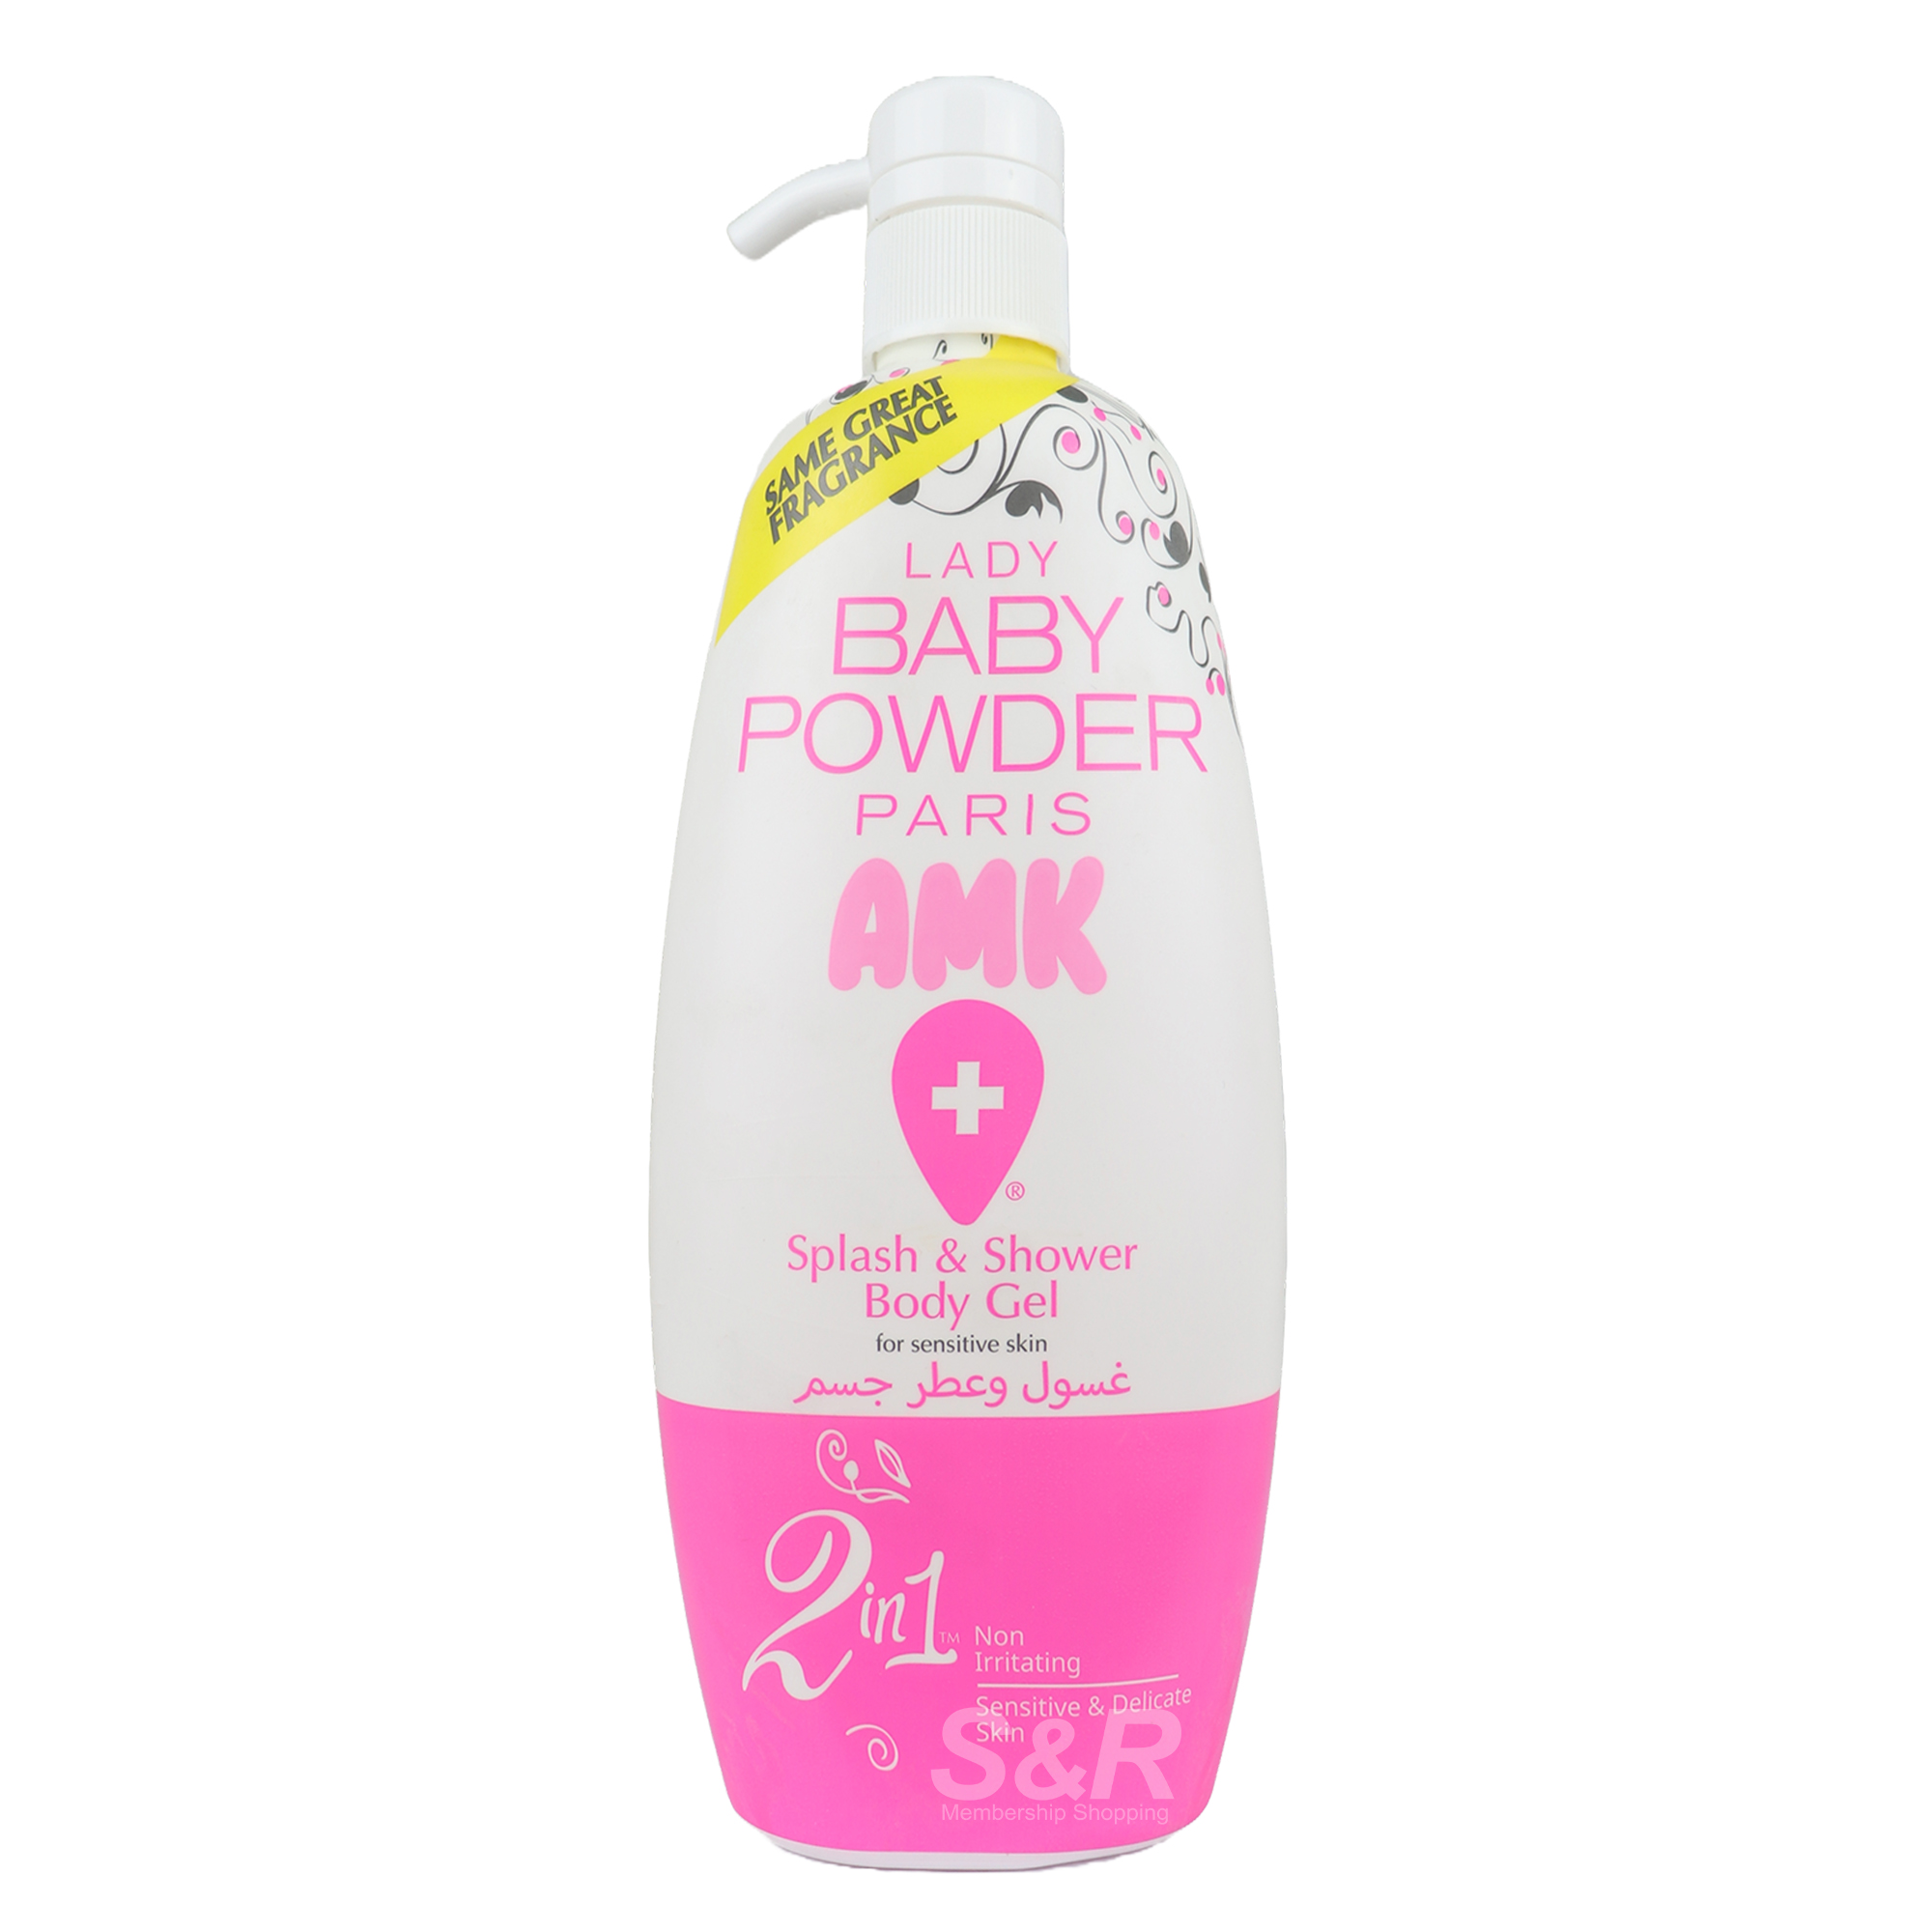 Lady Baby Powder Paris AMK Splash & Shower Body Gel Pink 800mL